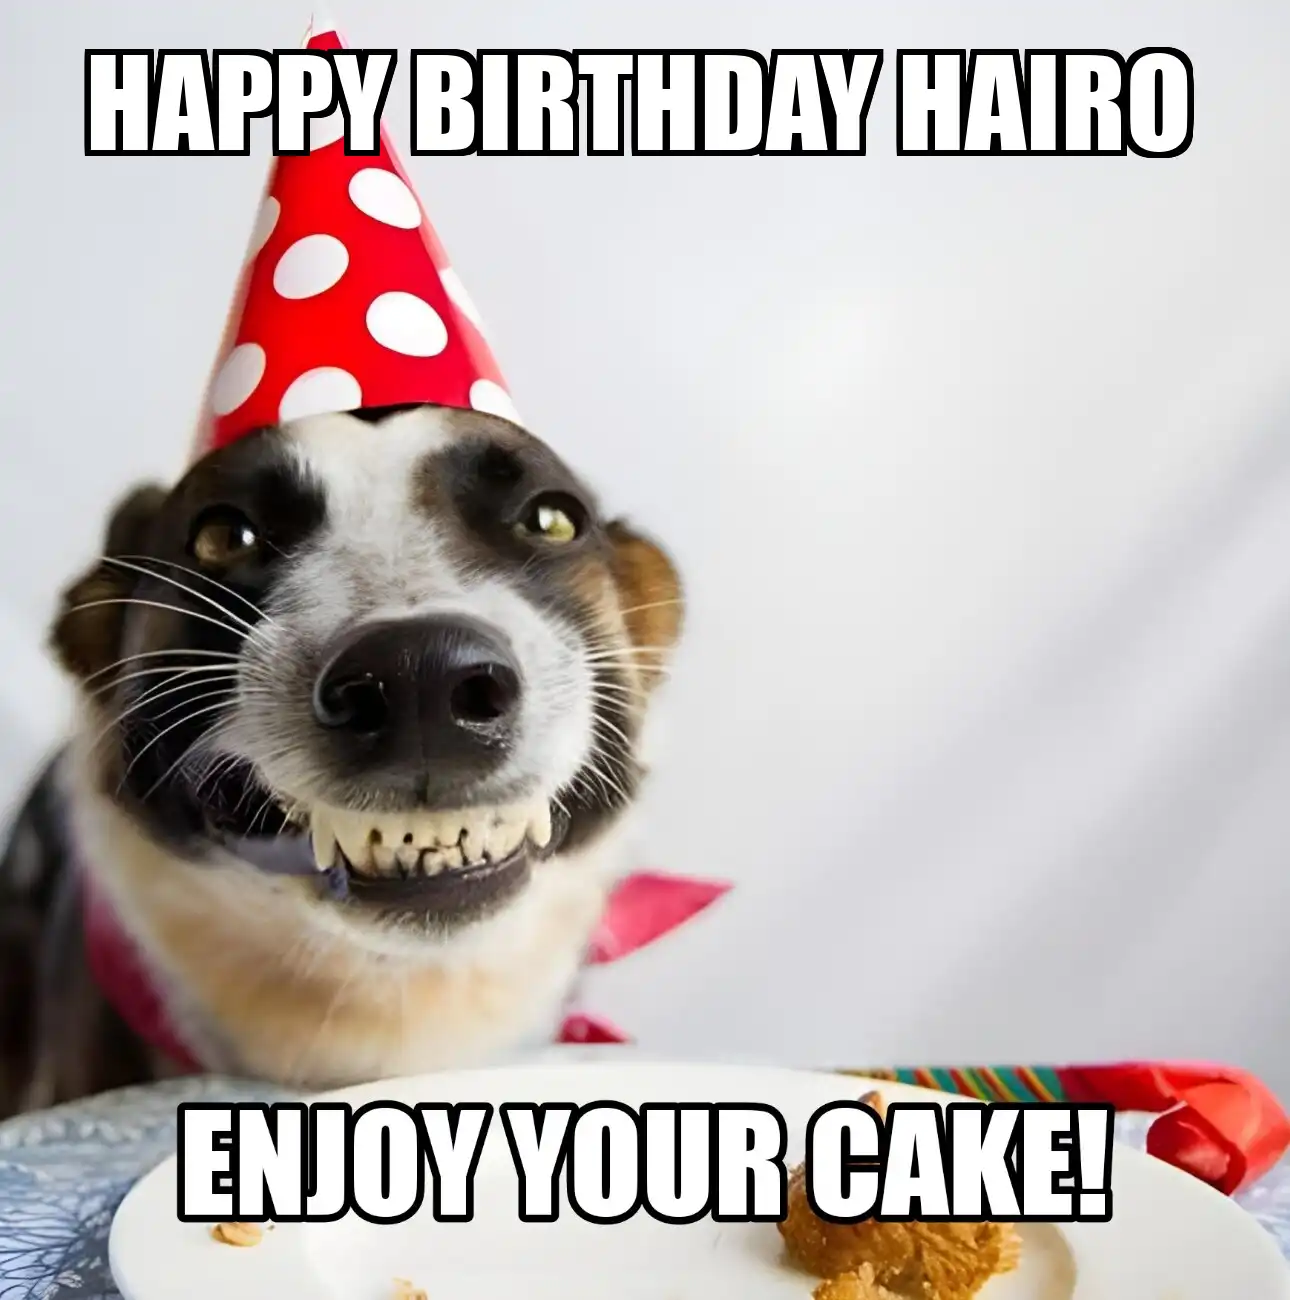 Happy Birthday Hairo Enjoy Your Cake Dog Meme